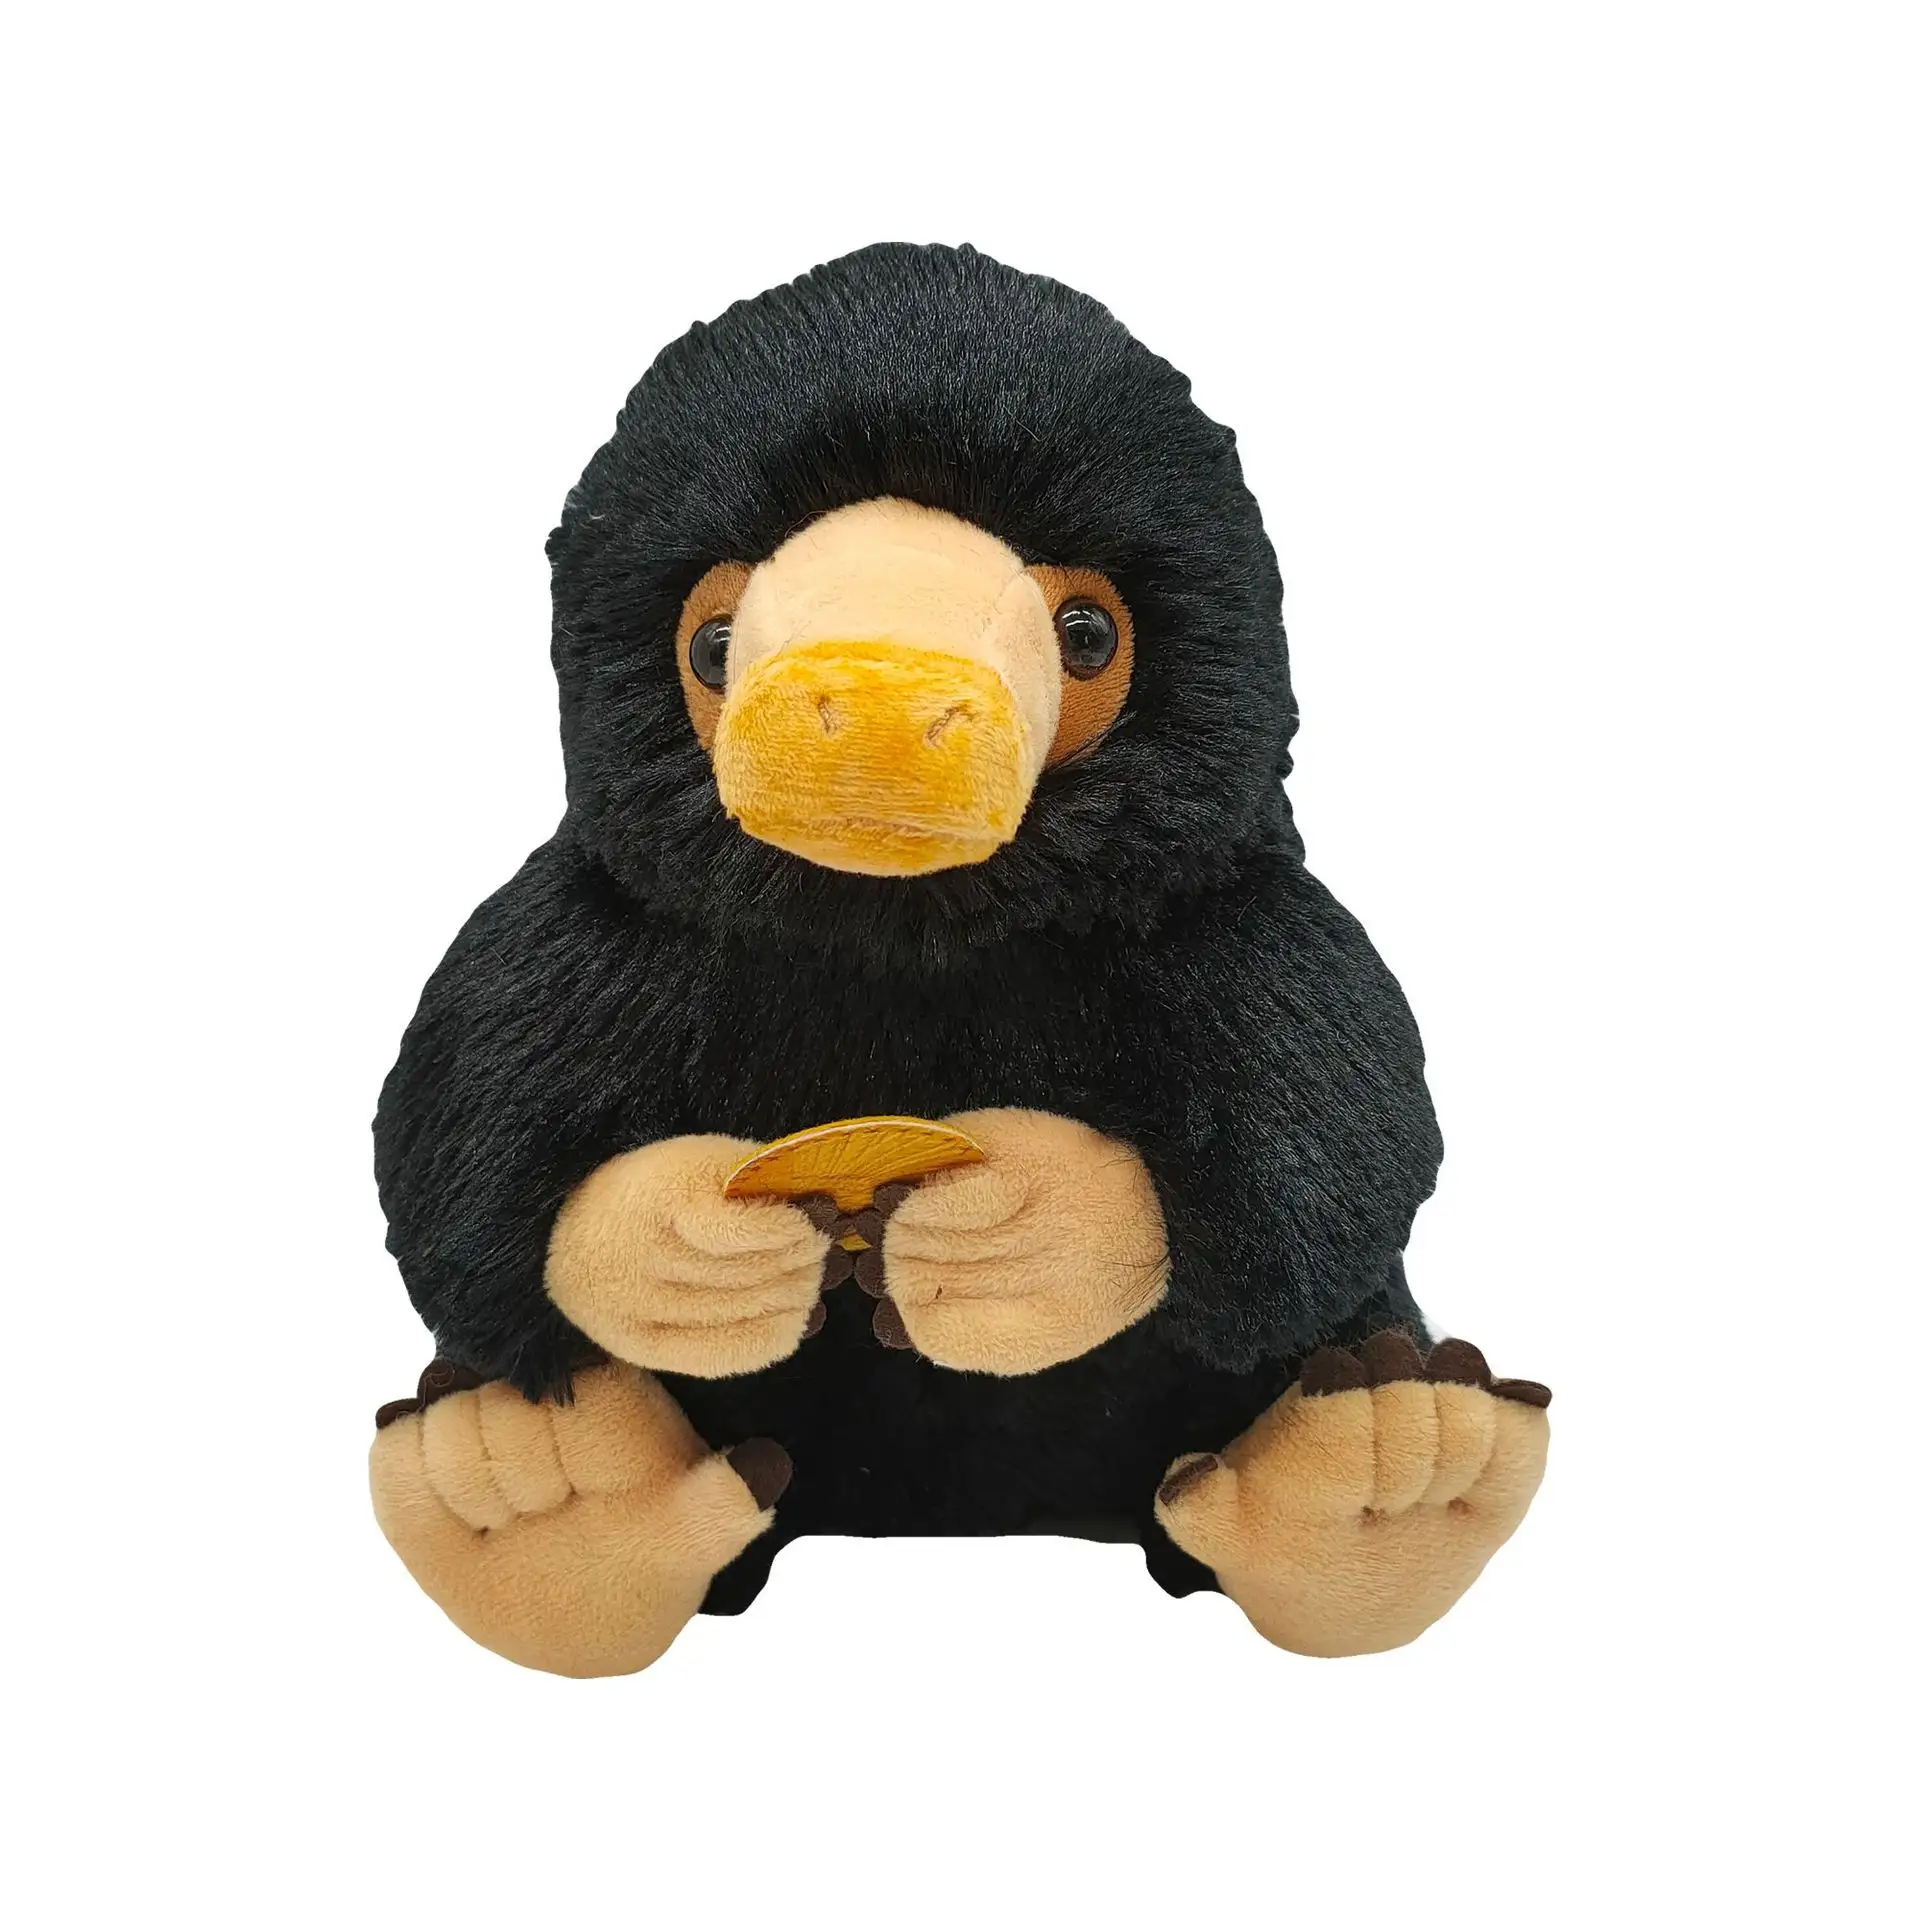 New Niffler Plush Doll Magical Animal Take Gold Coin Black Duckbills Soft Stuffed Animals Fantastic Beasts